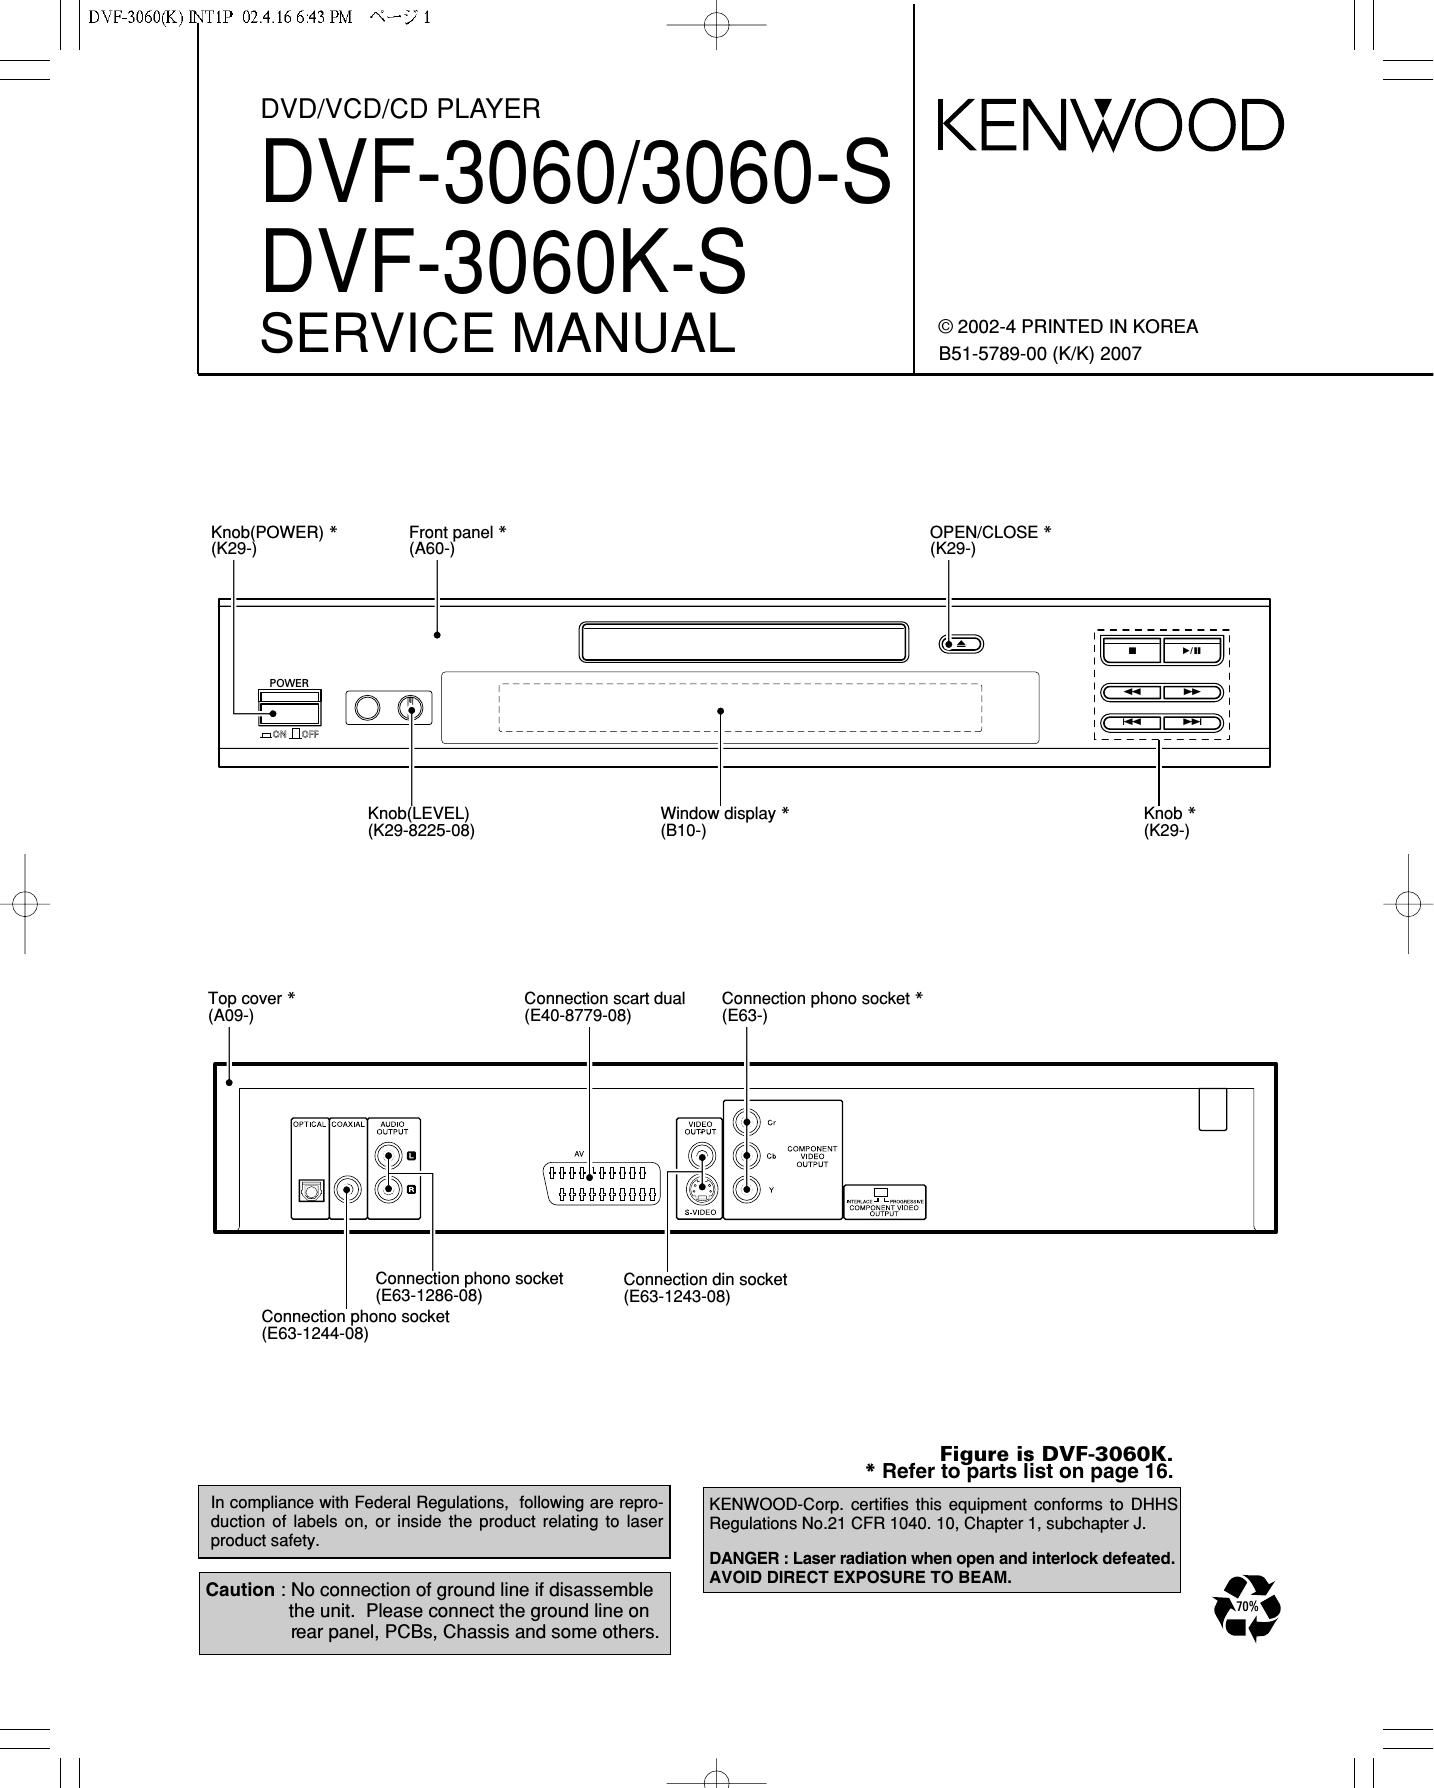 Kenwood DVF 3060 S Service Manual